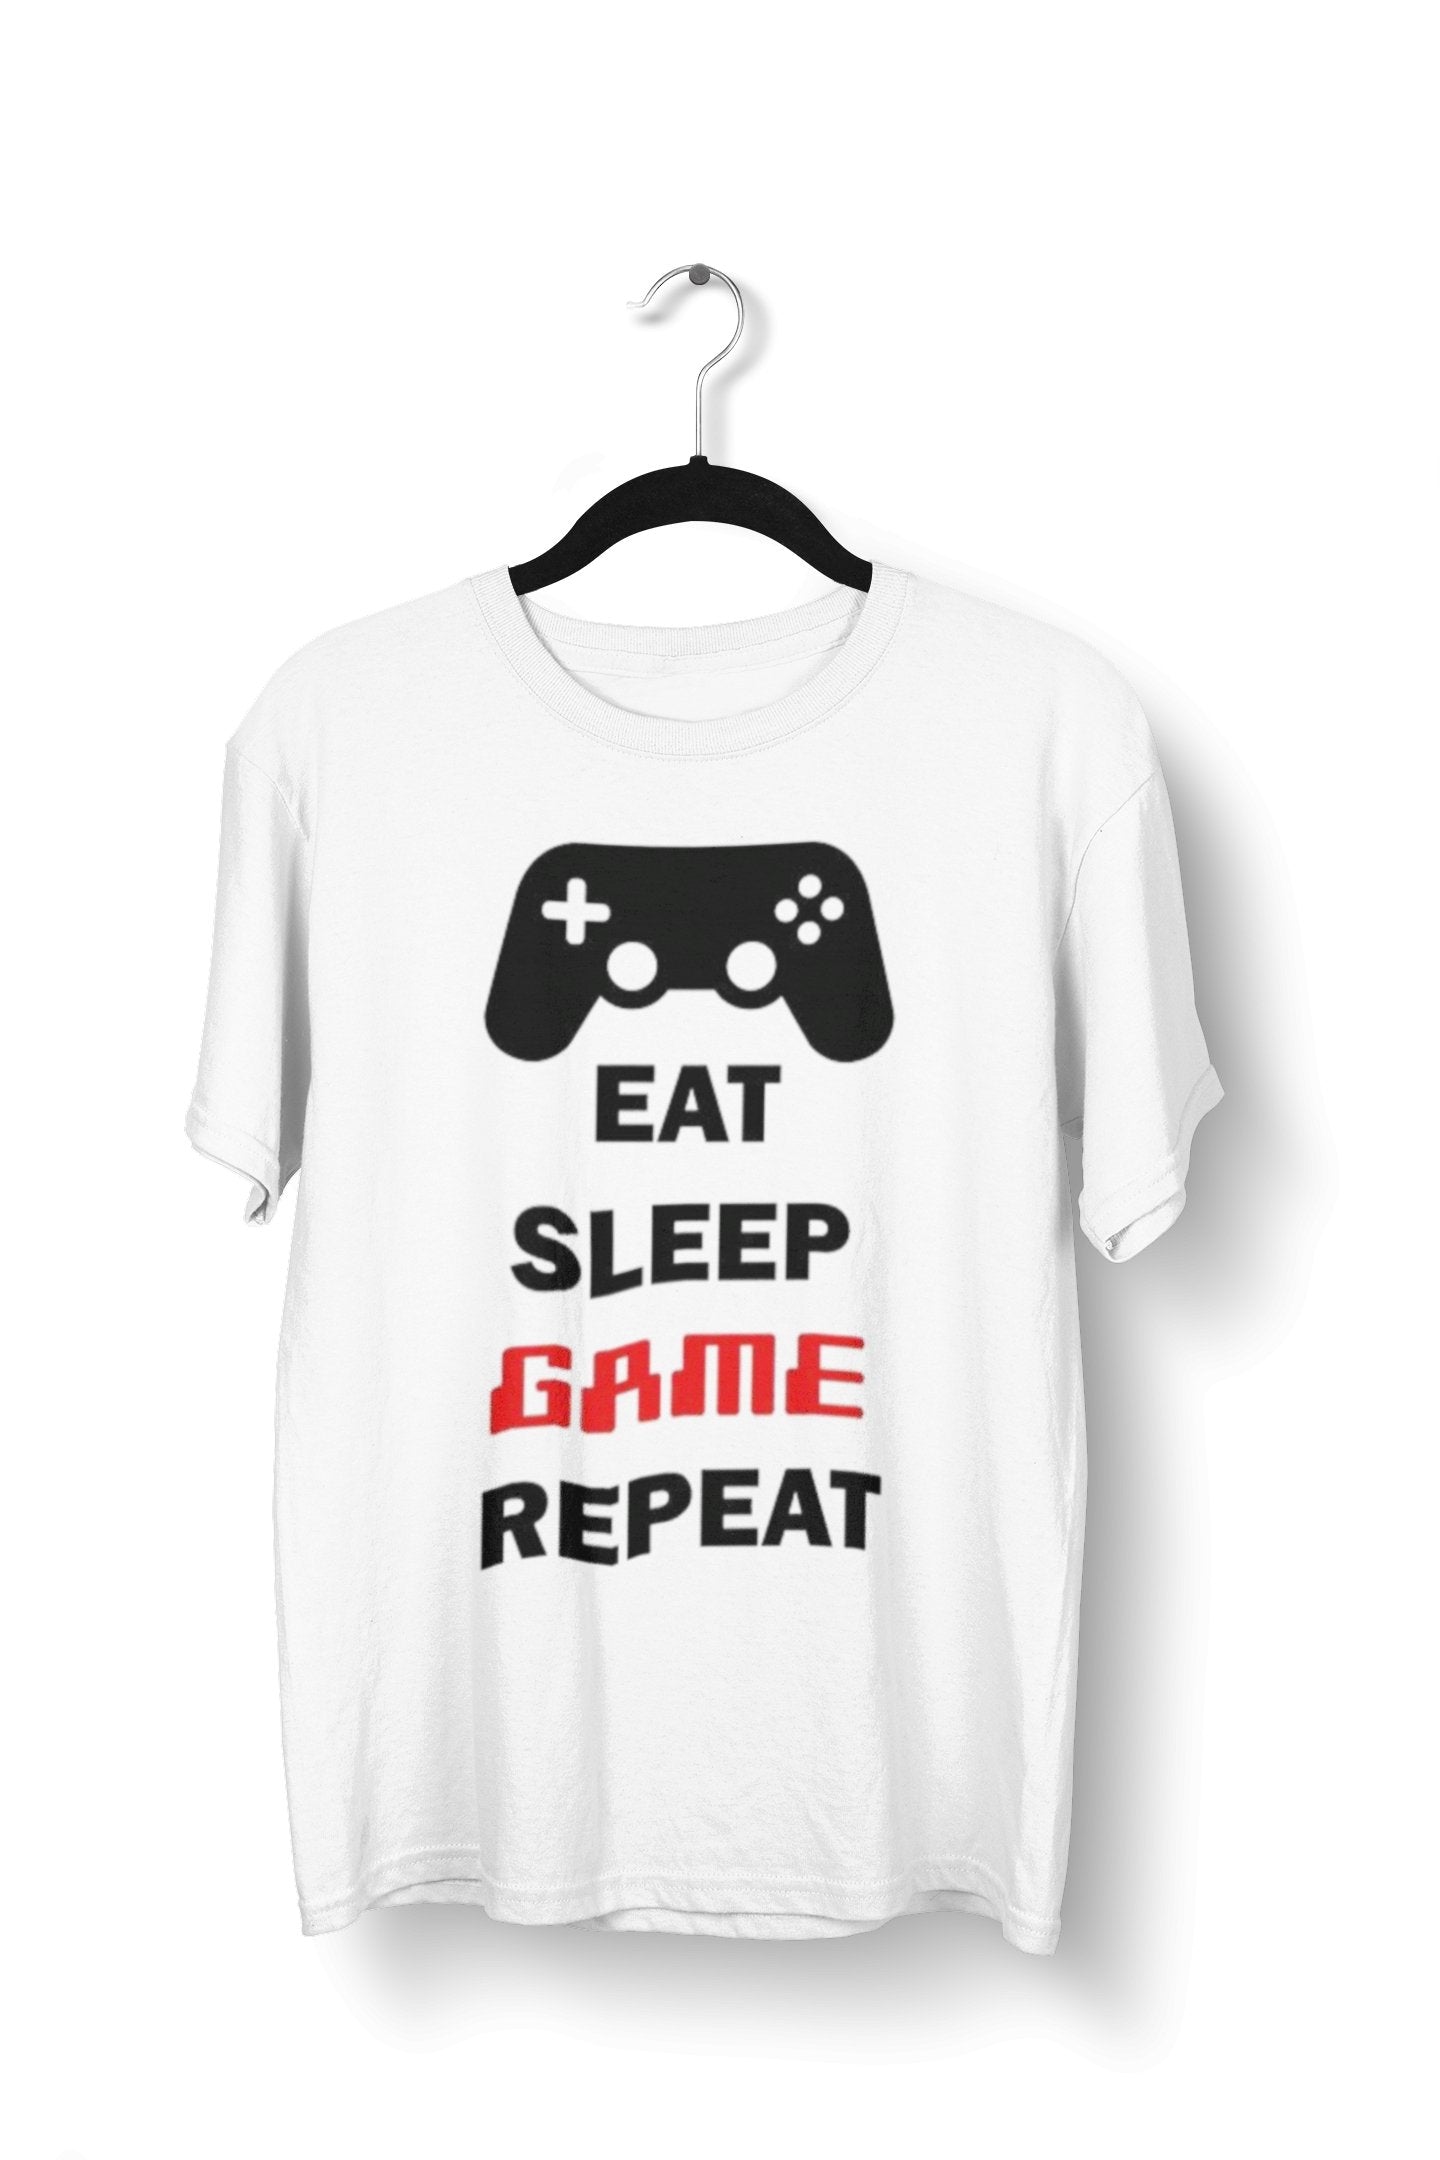 thelegalgang,Eat Sleep Game Repeat - Gaming T-Shirt for Men,MEN.